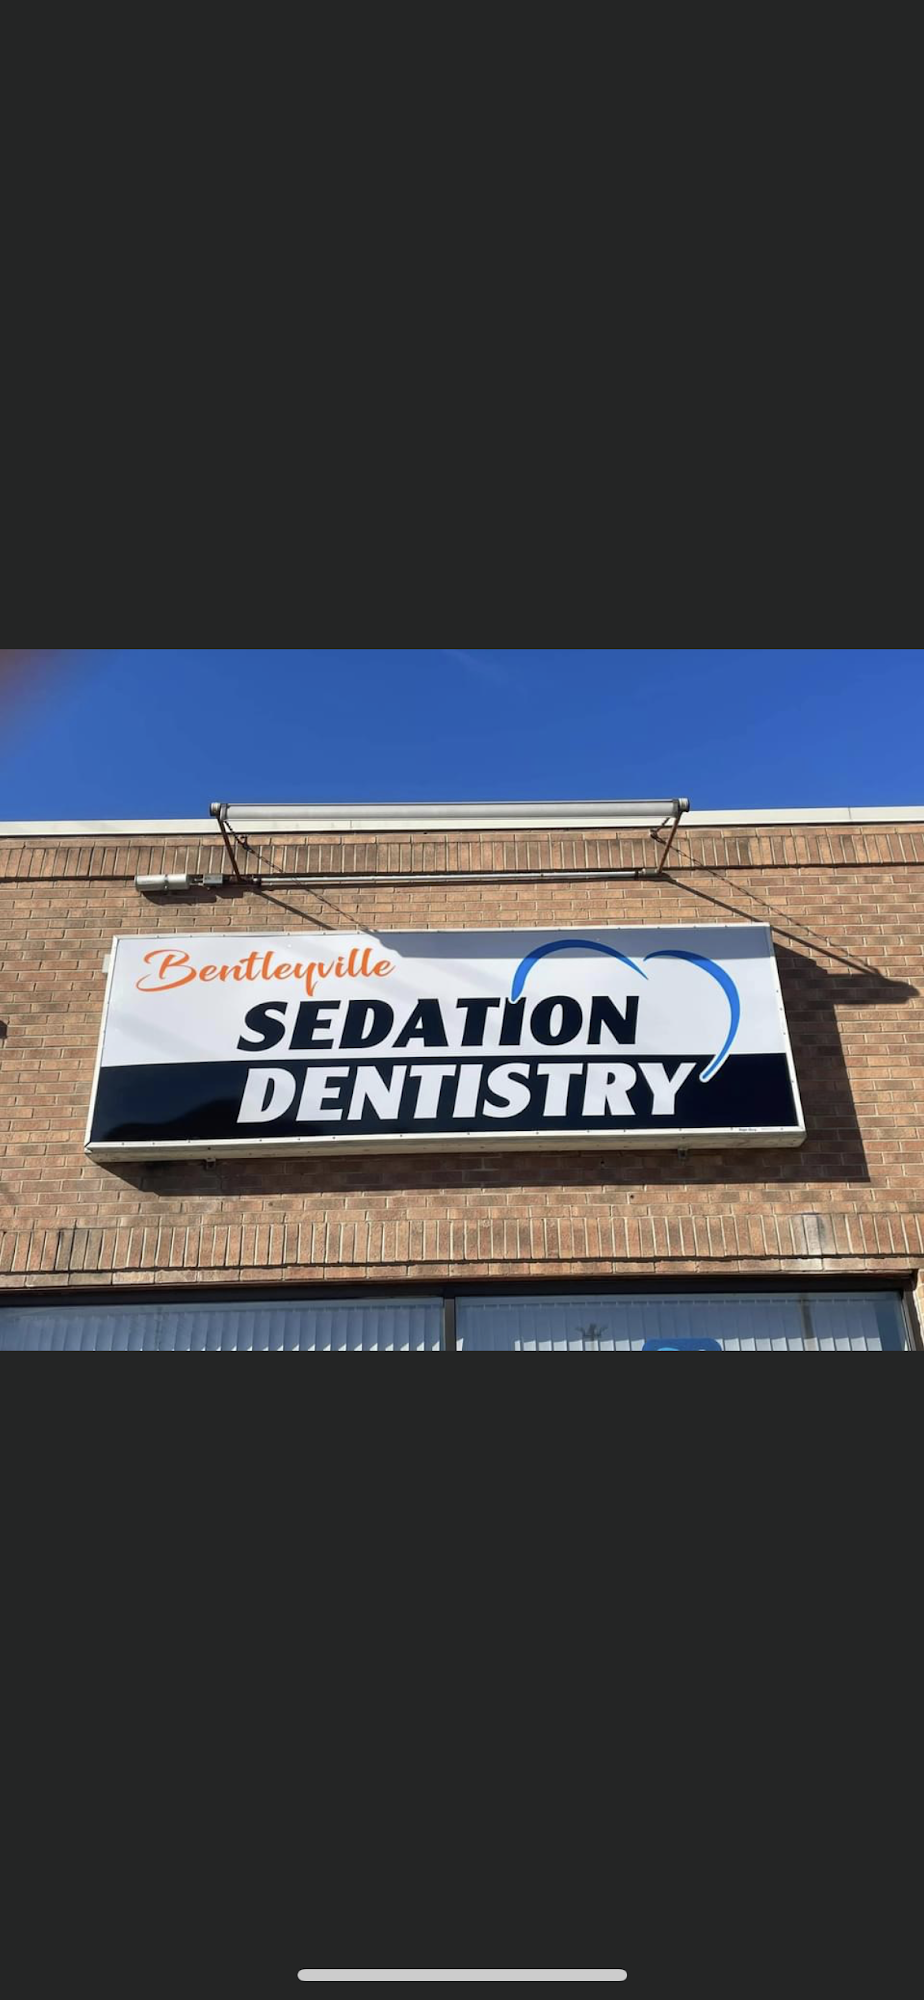 Bentleyville Sedation Dentistry